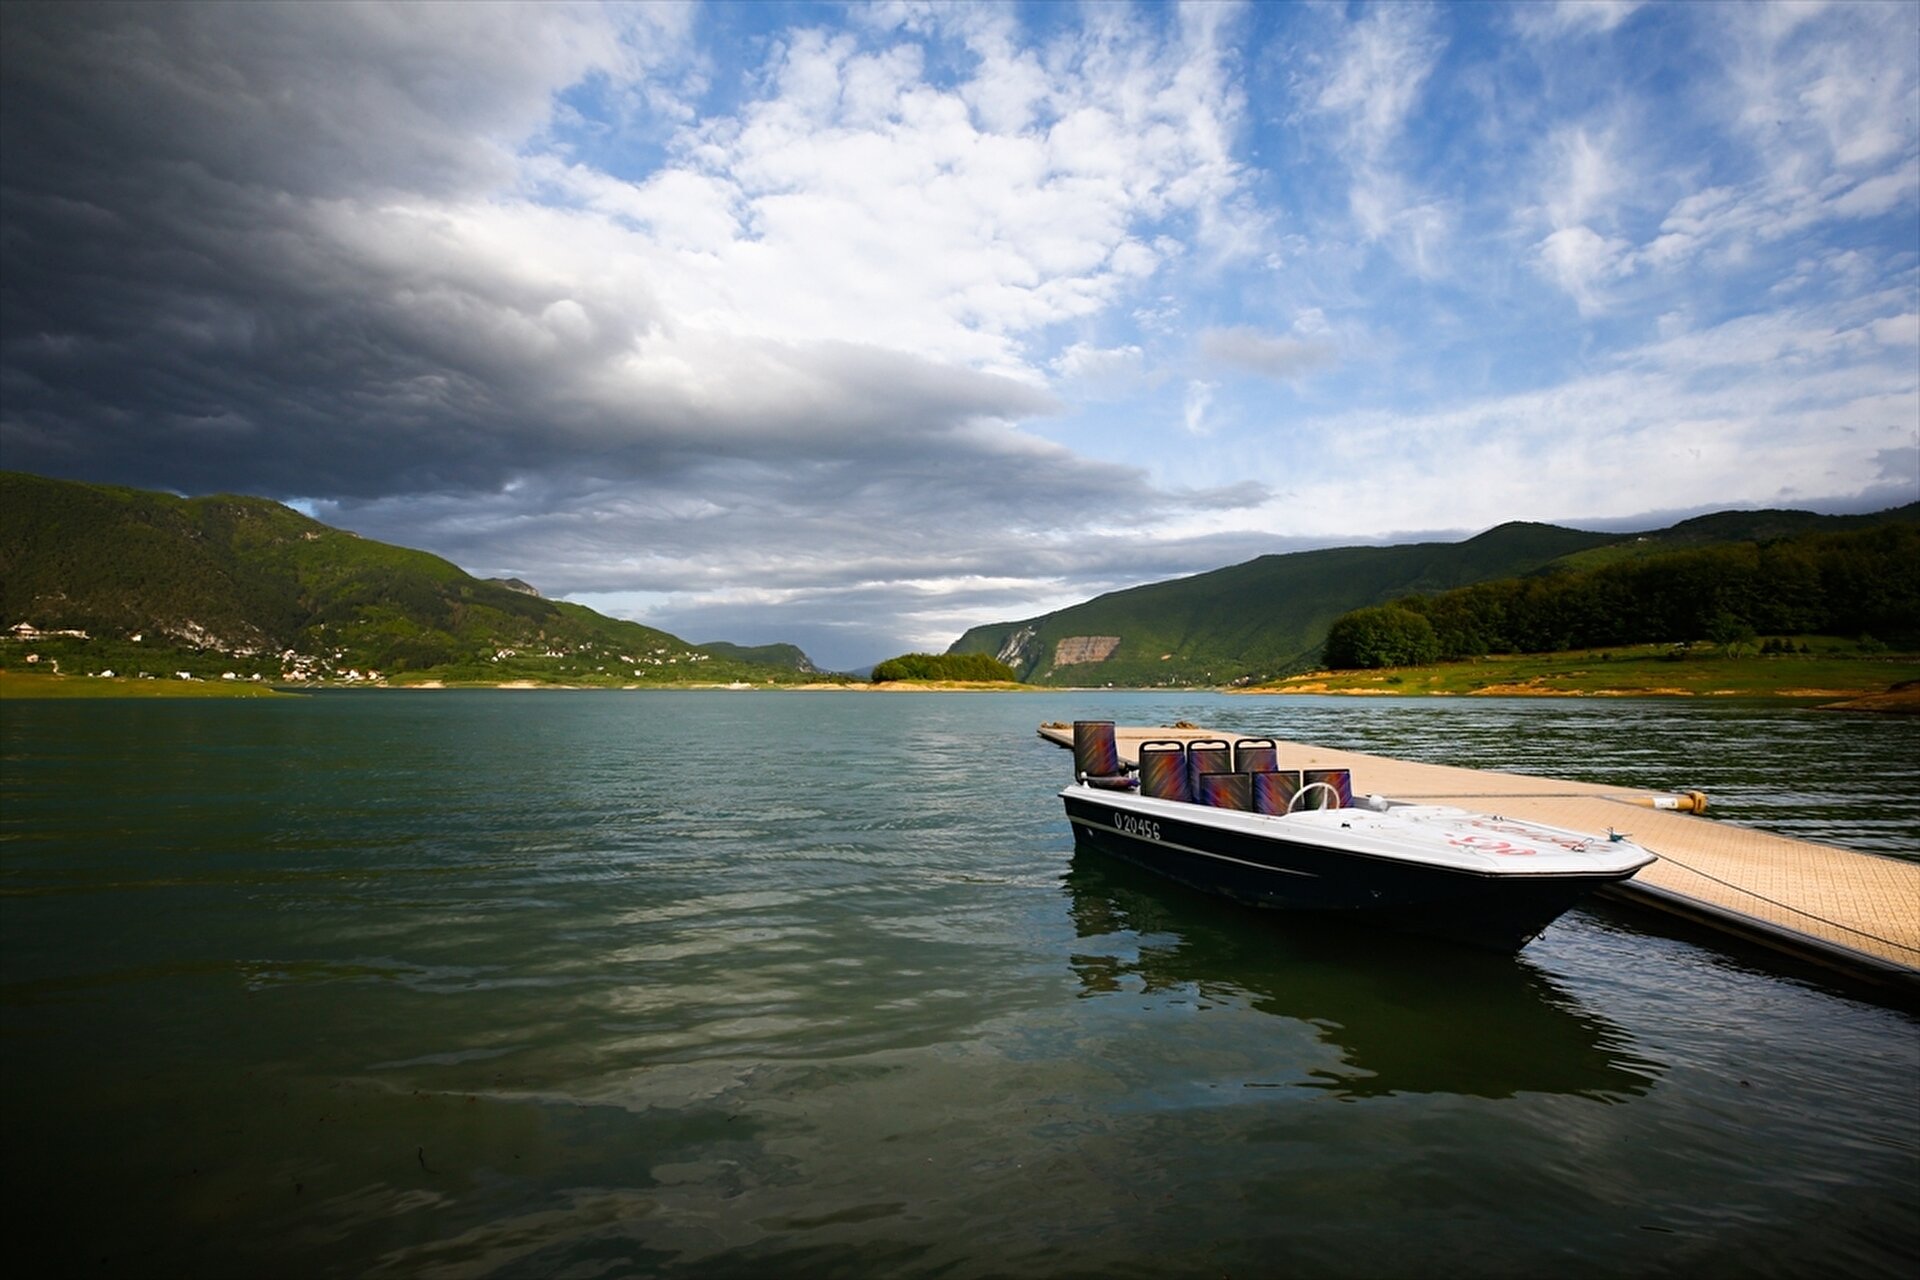 Silence in Bosnia and Herzegovina's Rama Lake due to Covid-19